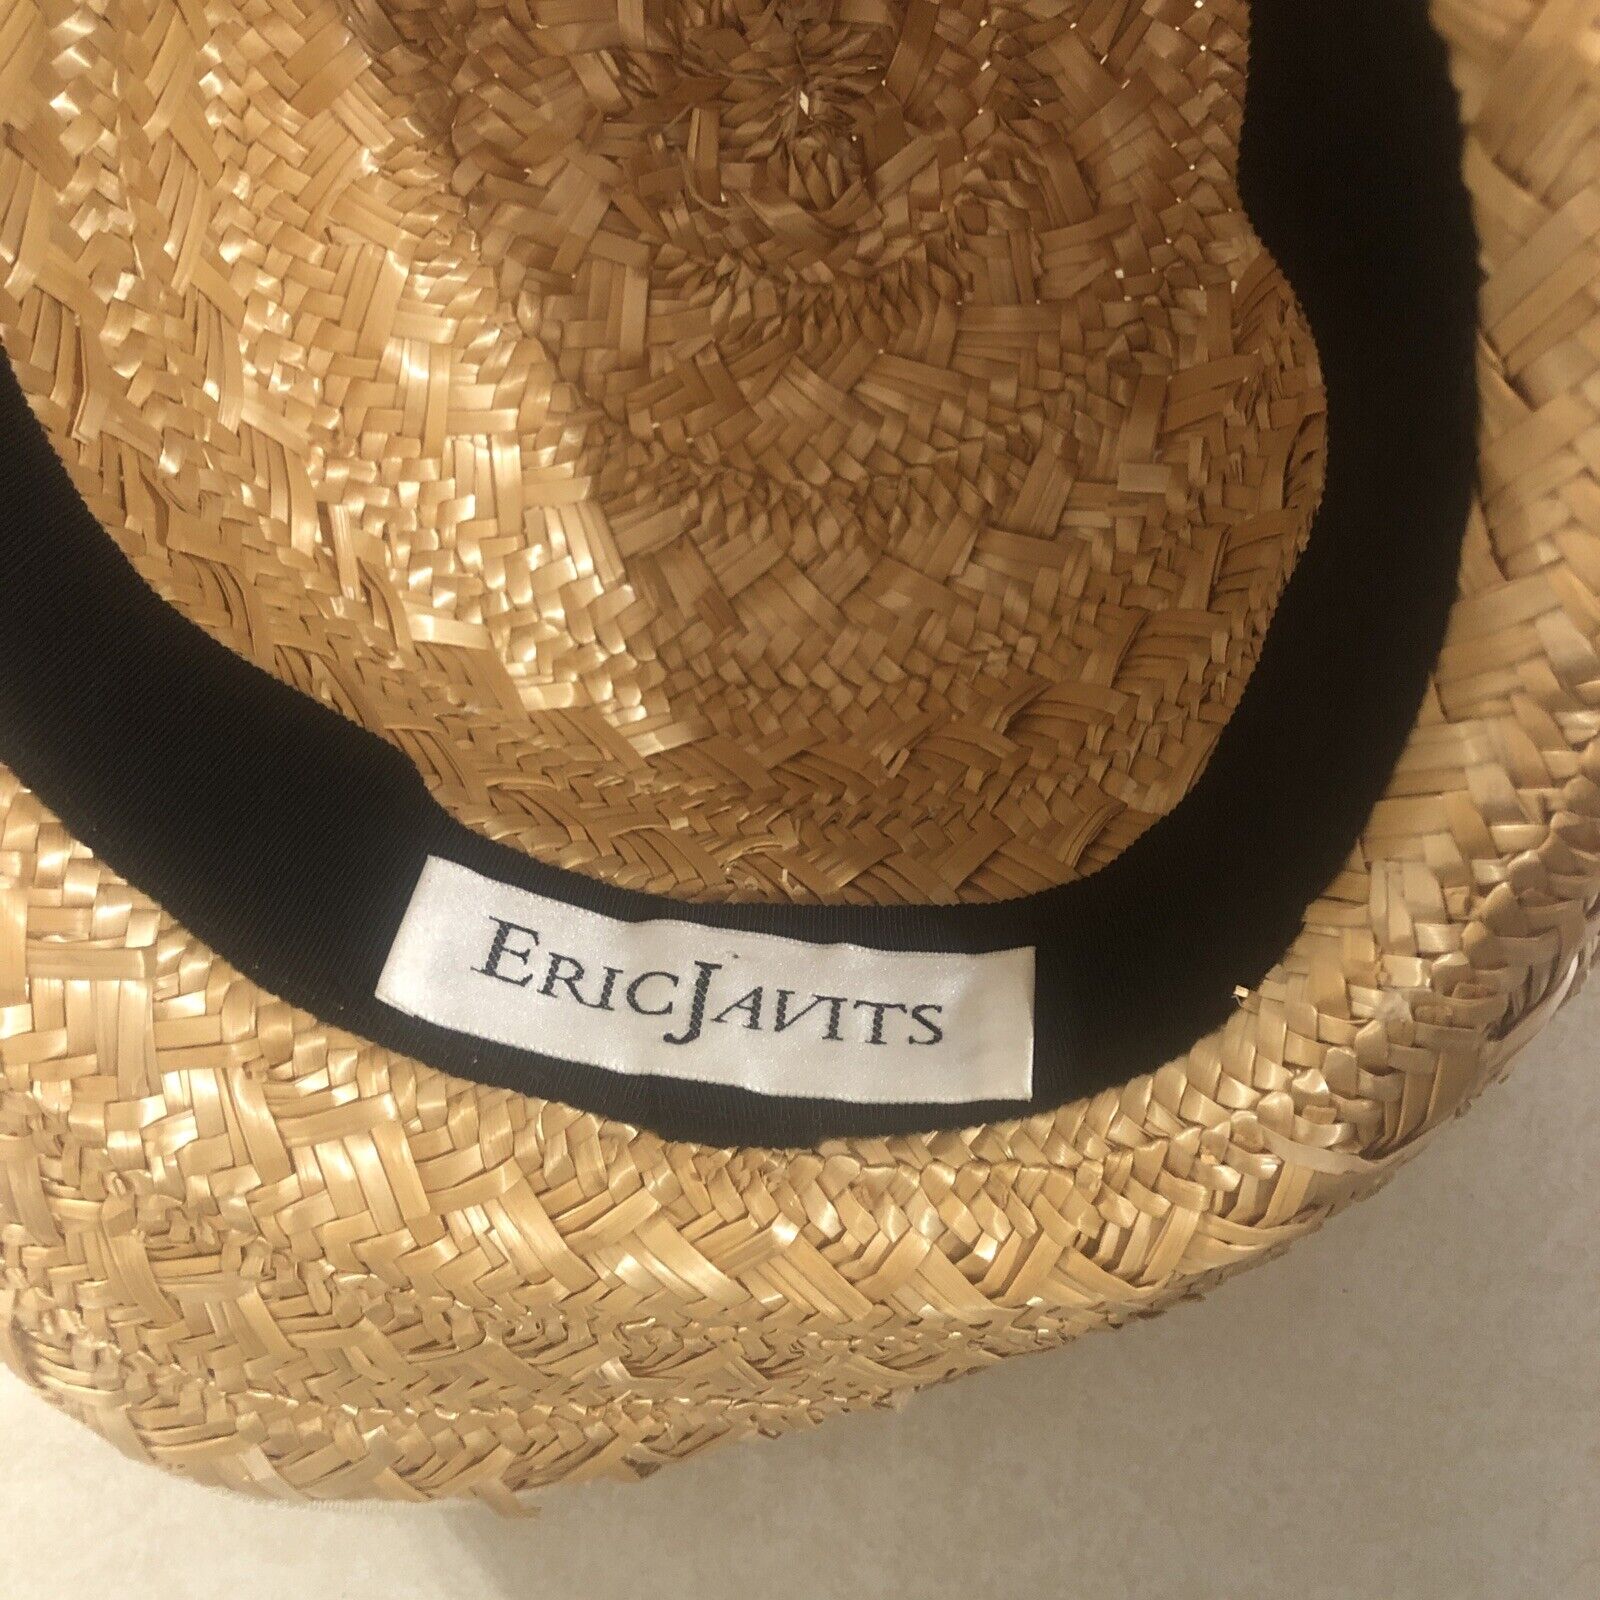 Eric javits hat - image 3